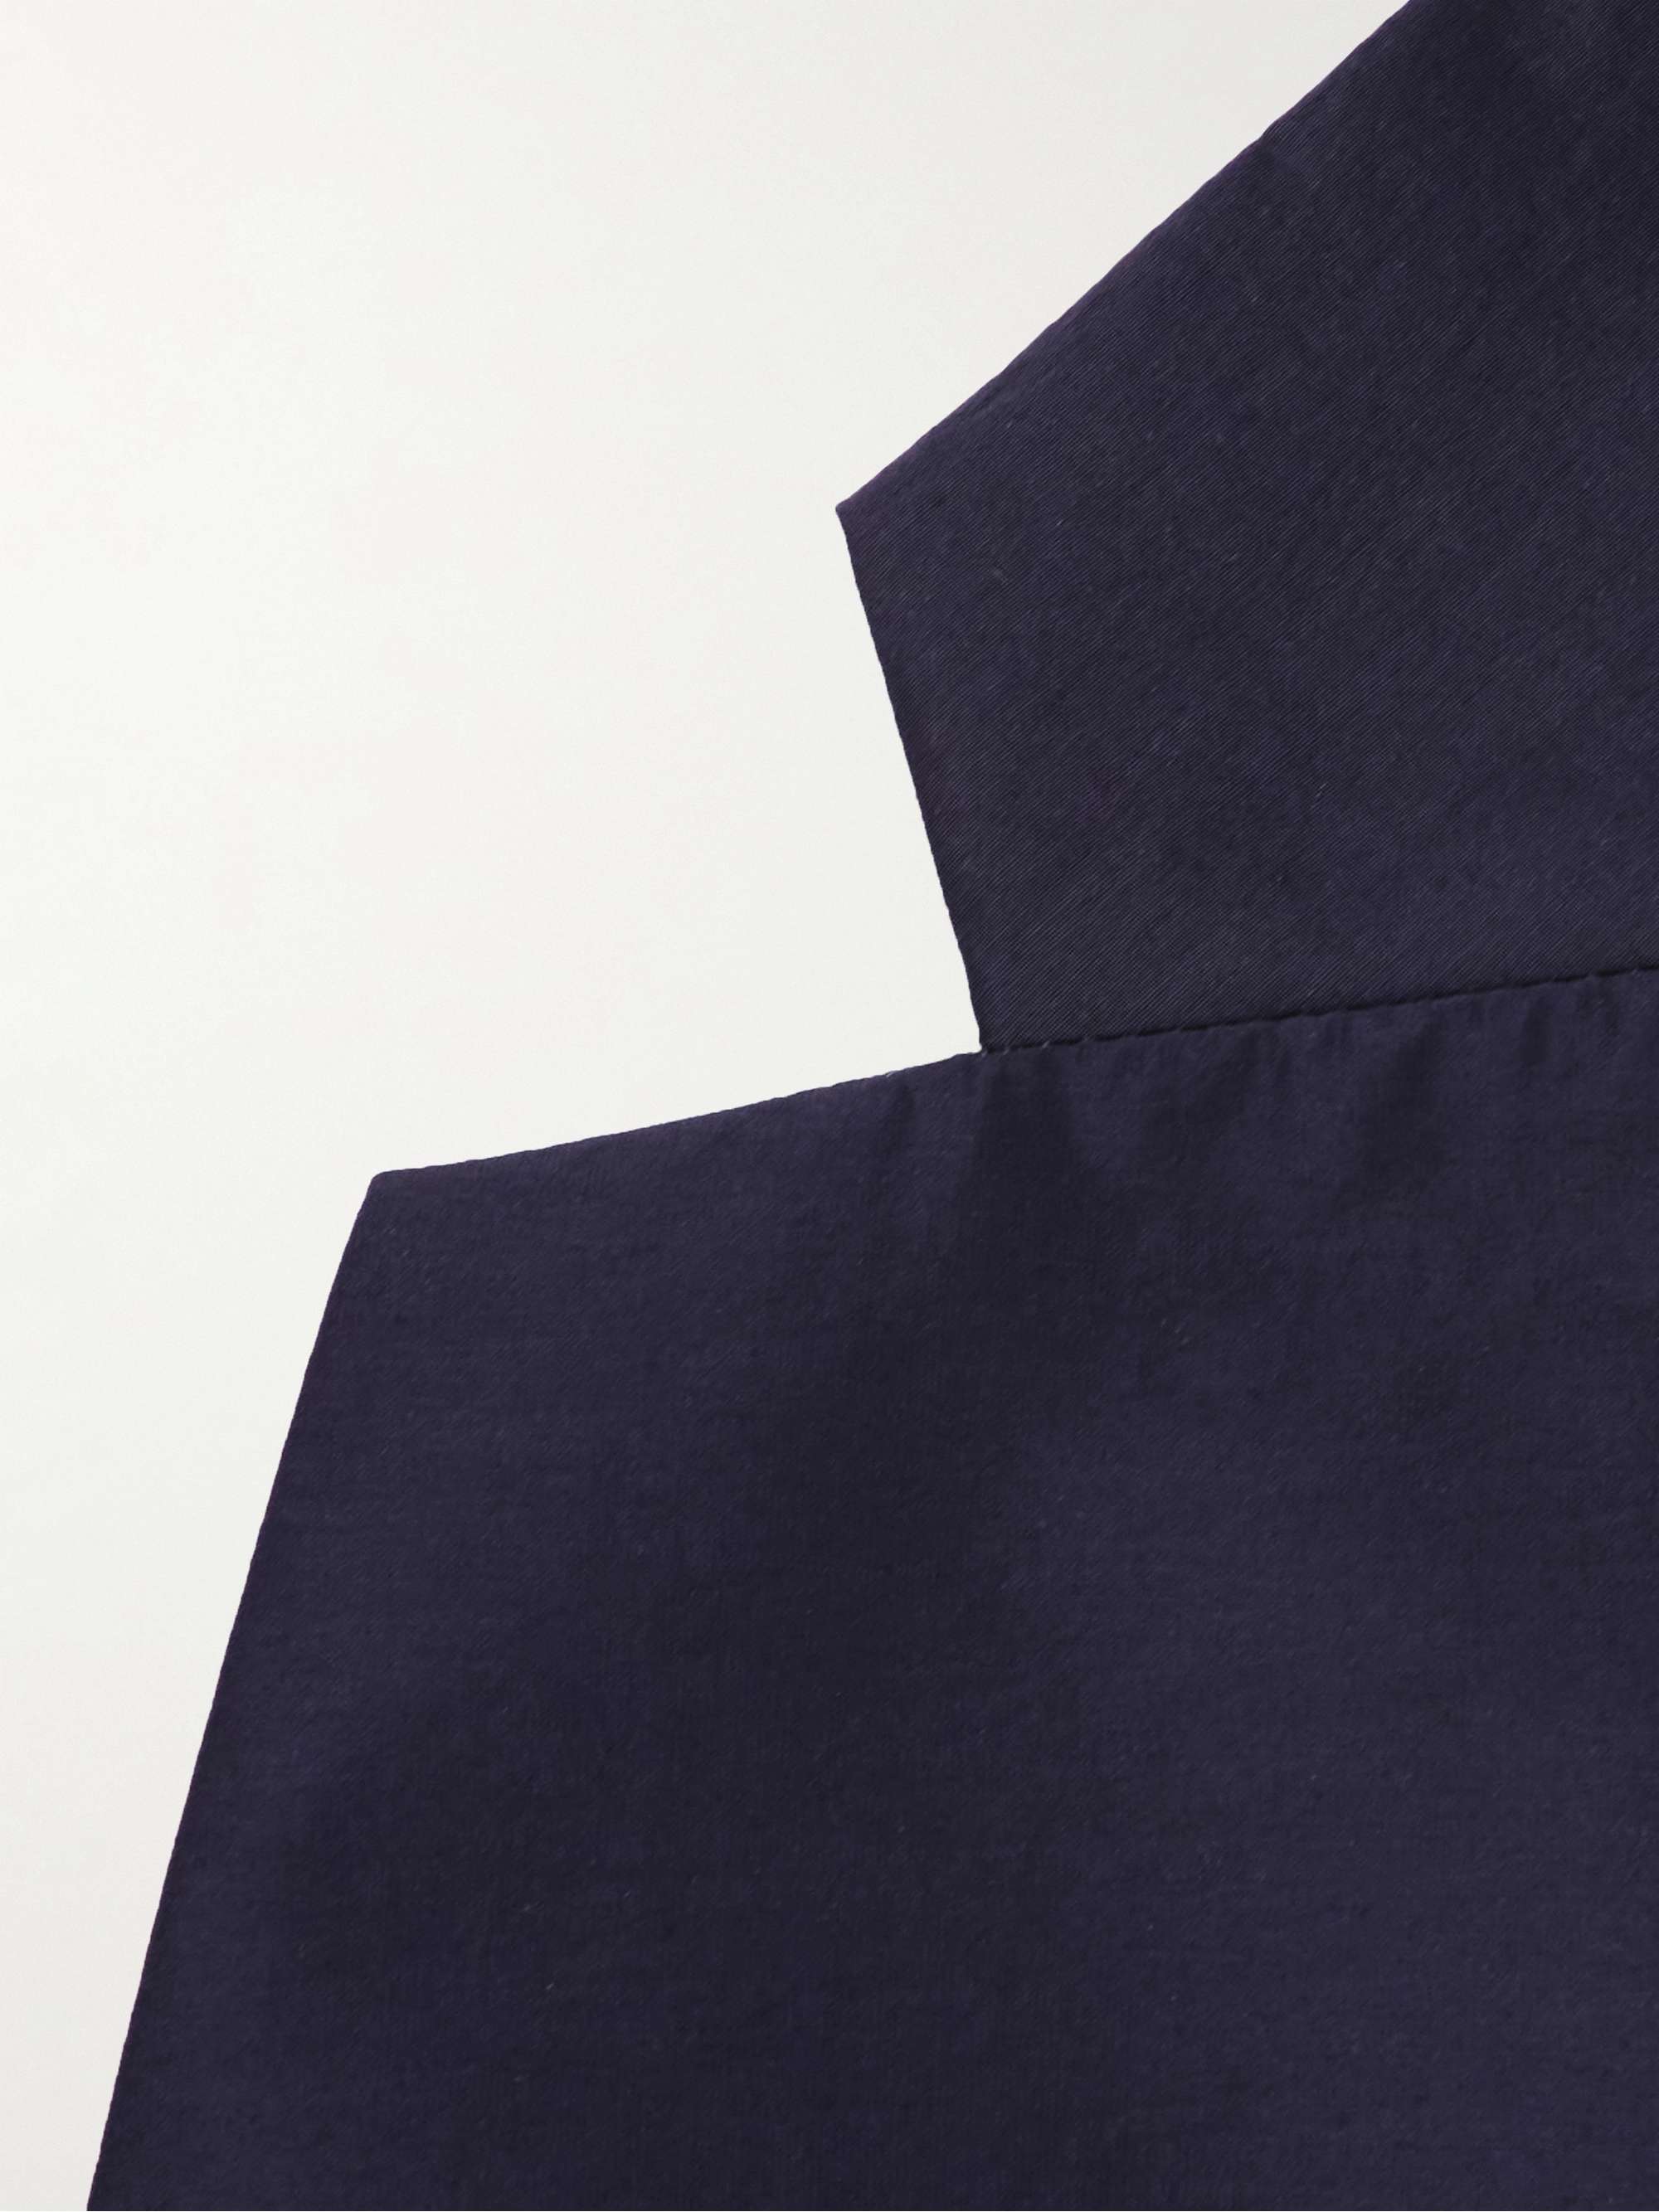 LOEWE Unstructured Double-Breasted Wool-Blend Blazer for Men | MR PORTER